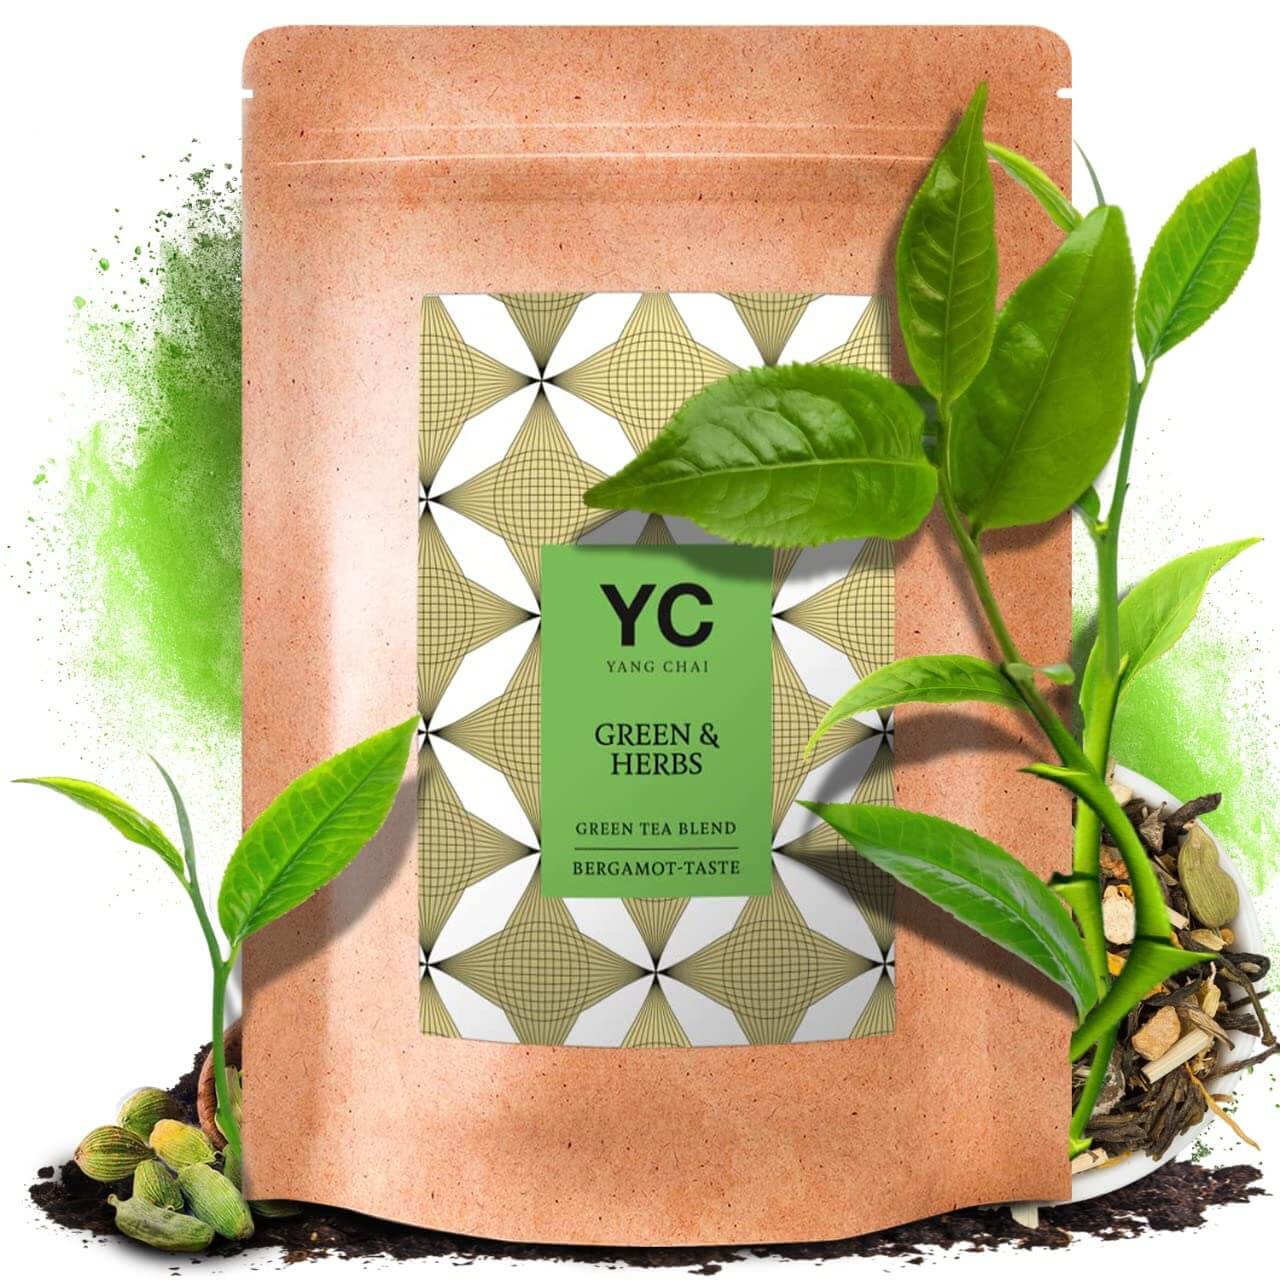 YC Yang Chai Bio Kräutertee mit Bergamot Geschmack 